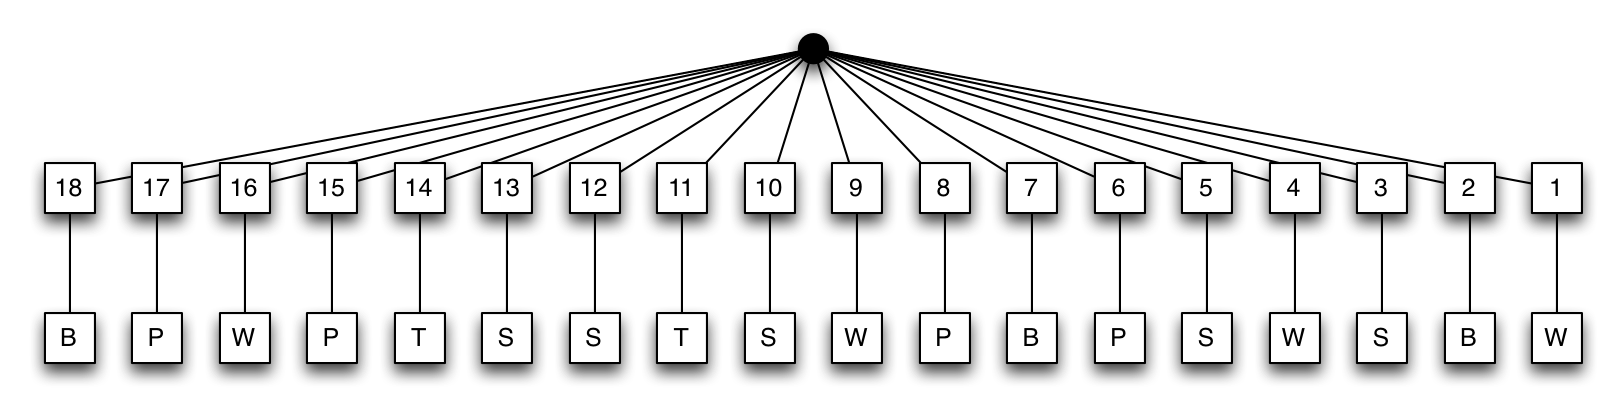 Index Tree Diagram {ts:-1, category:1}